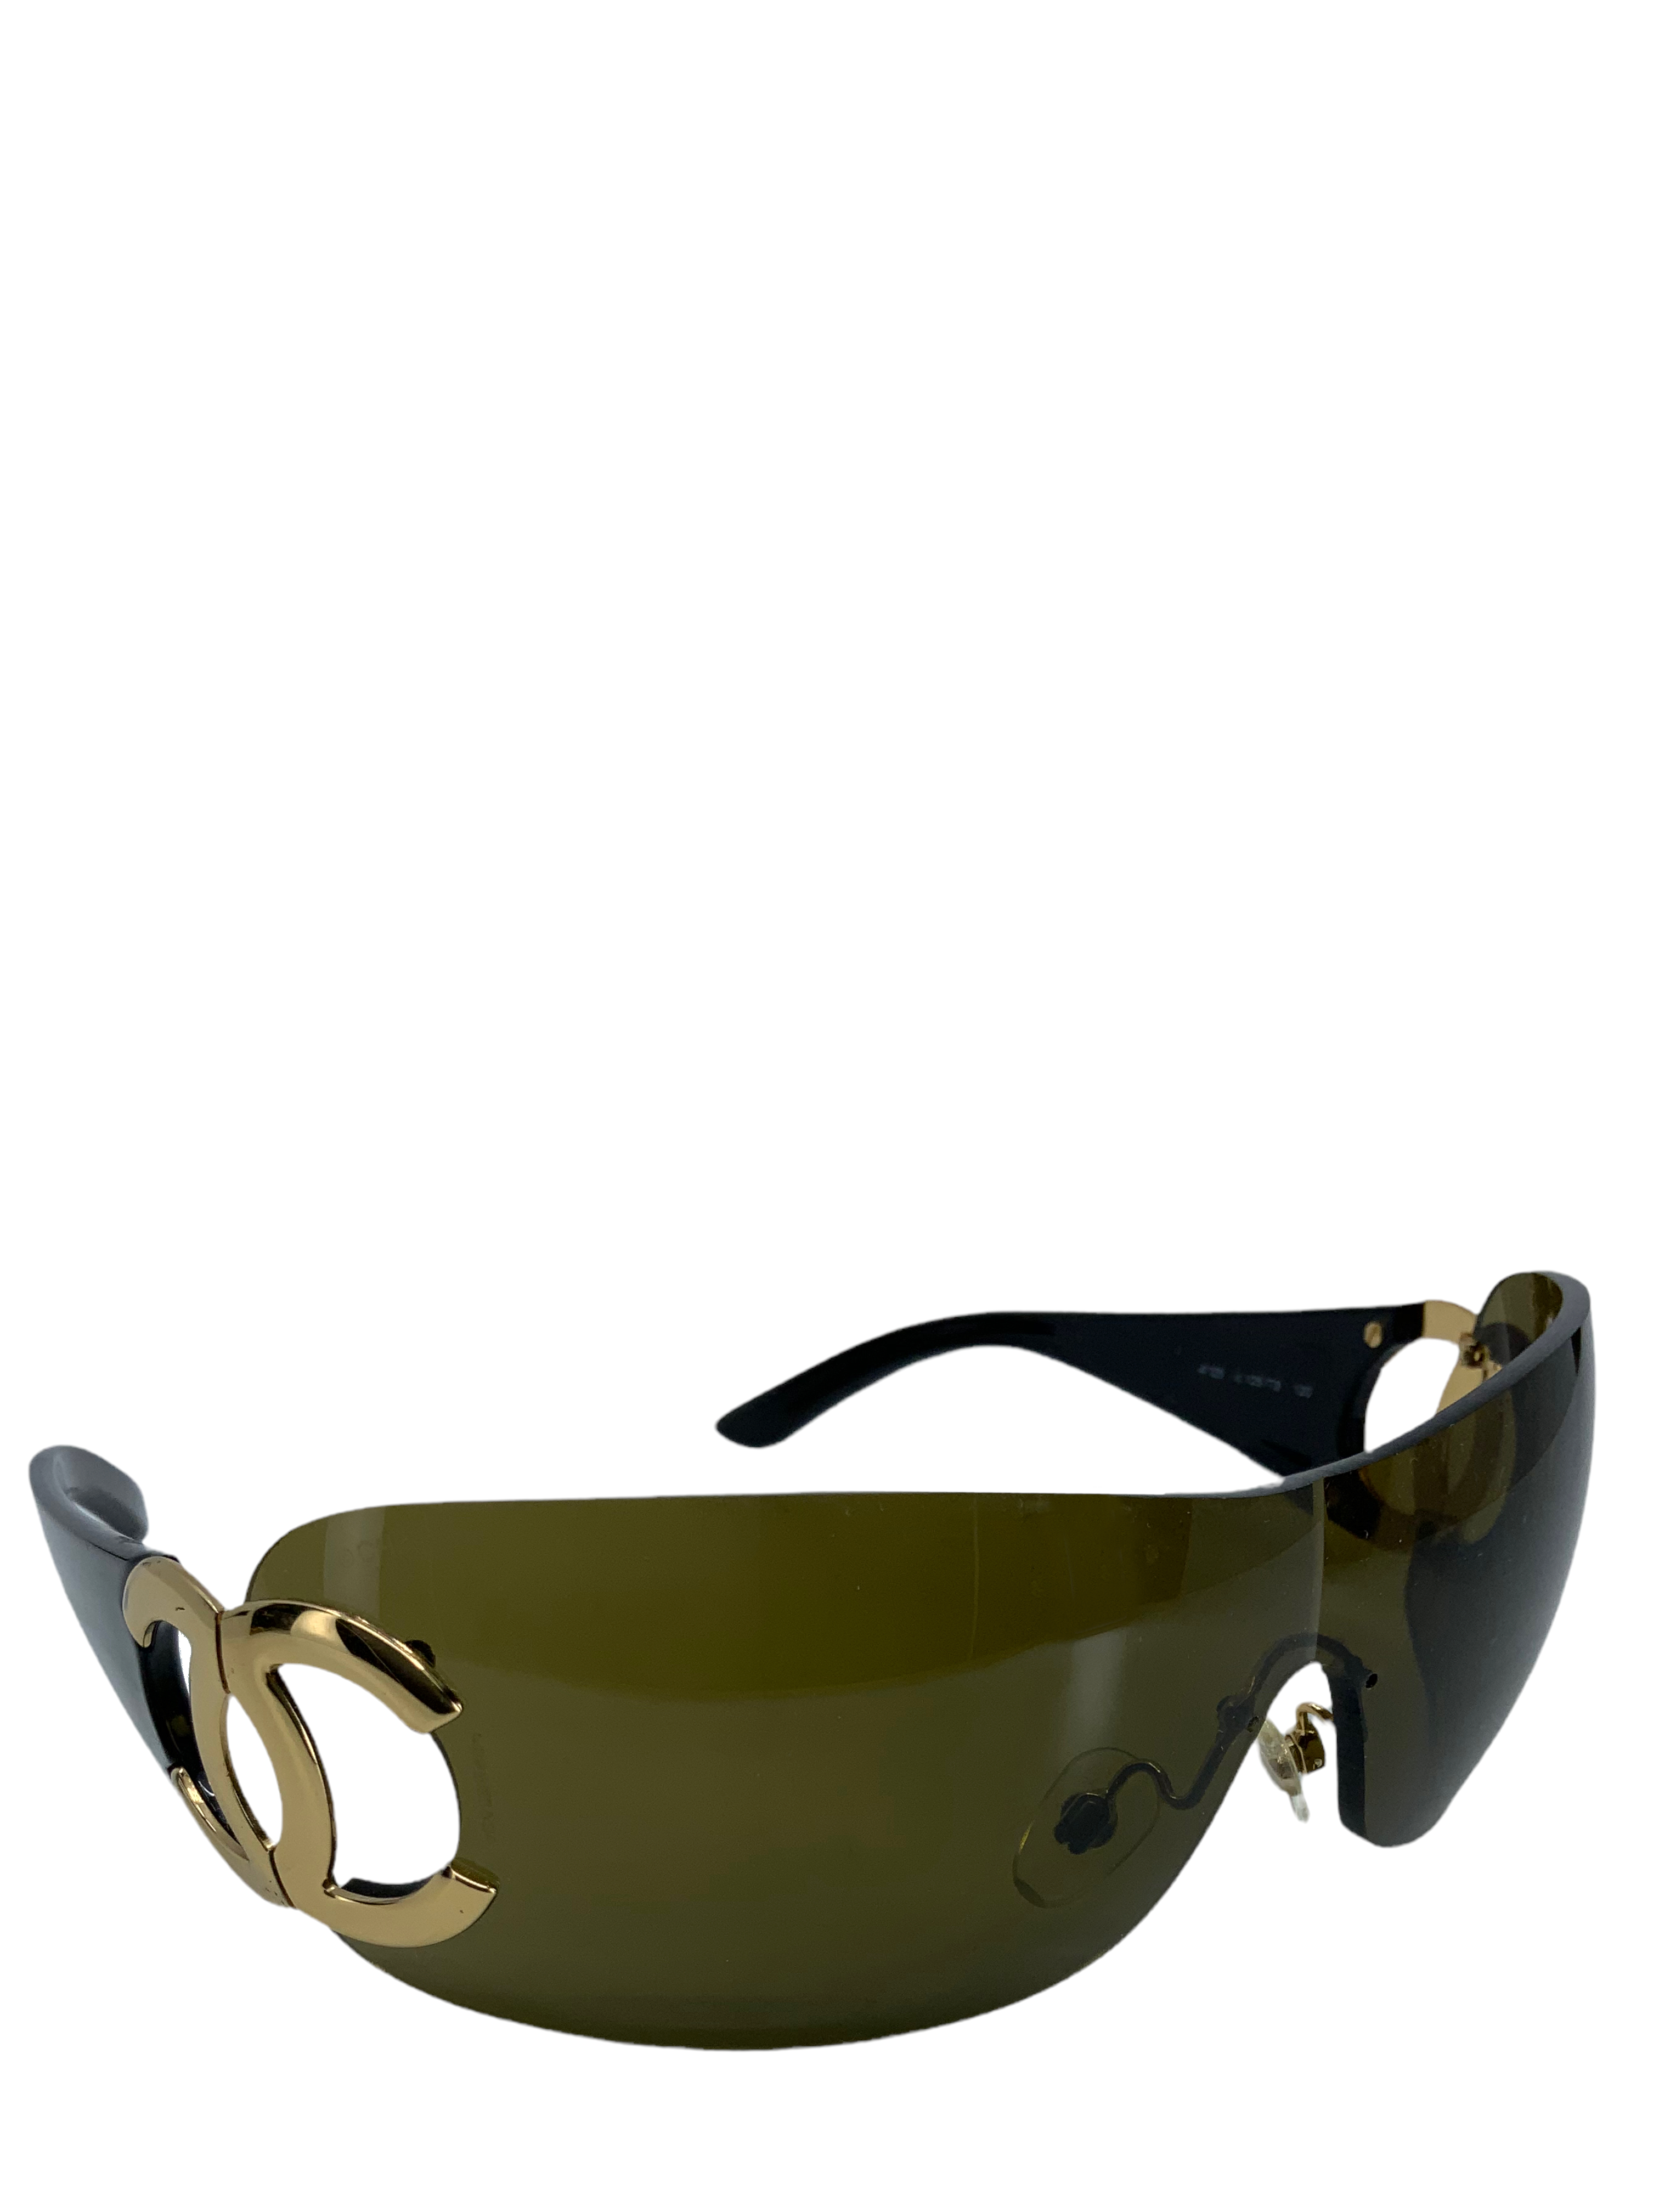 CHANEL Frameless CC Logo Sunglasses 4125